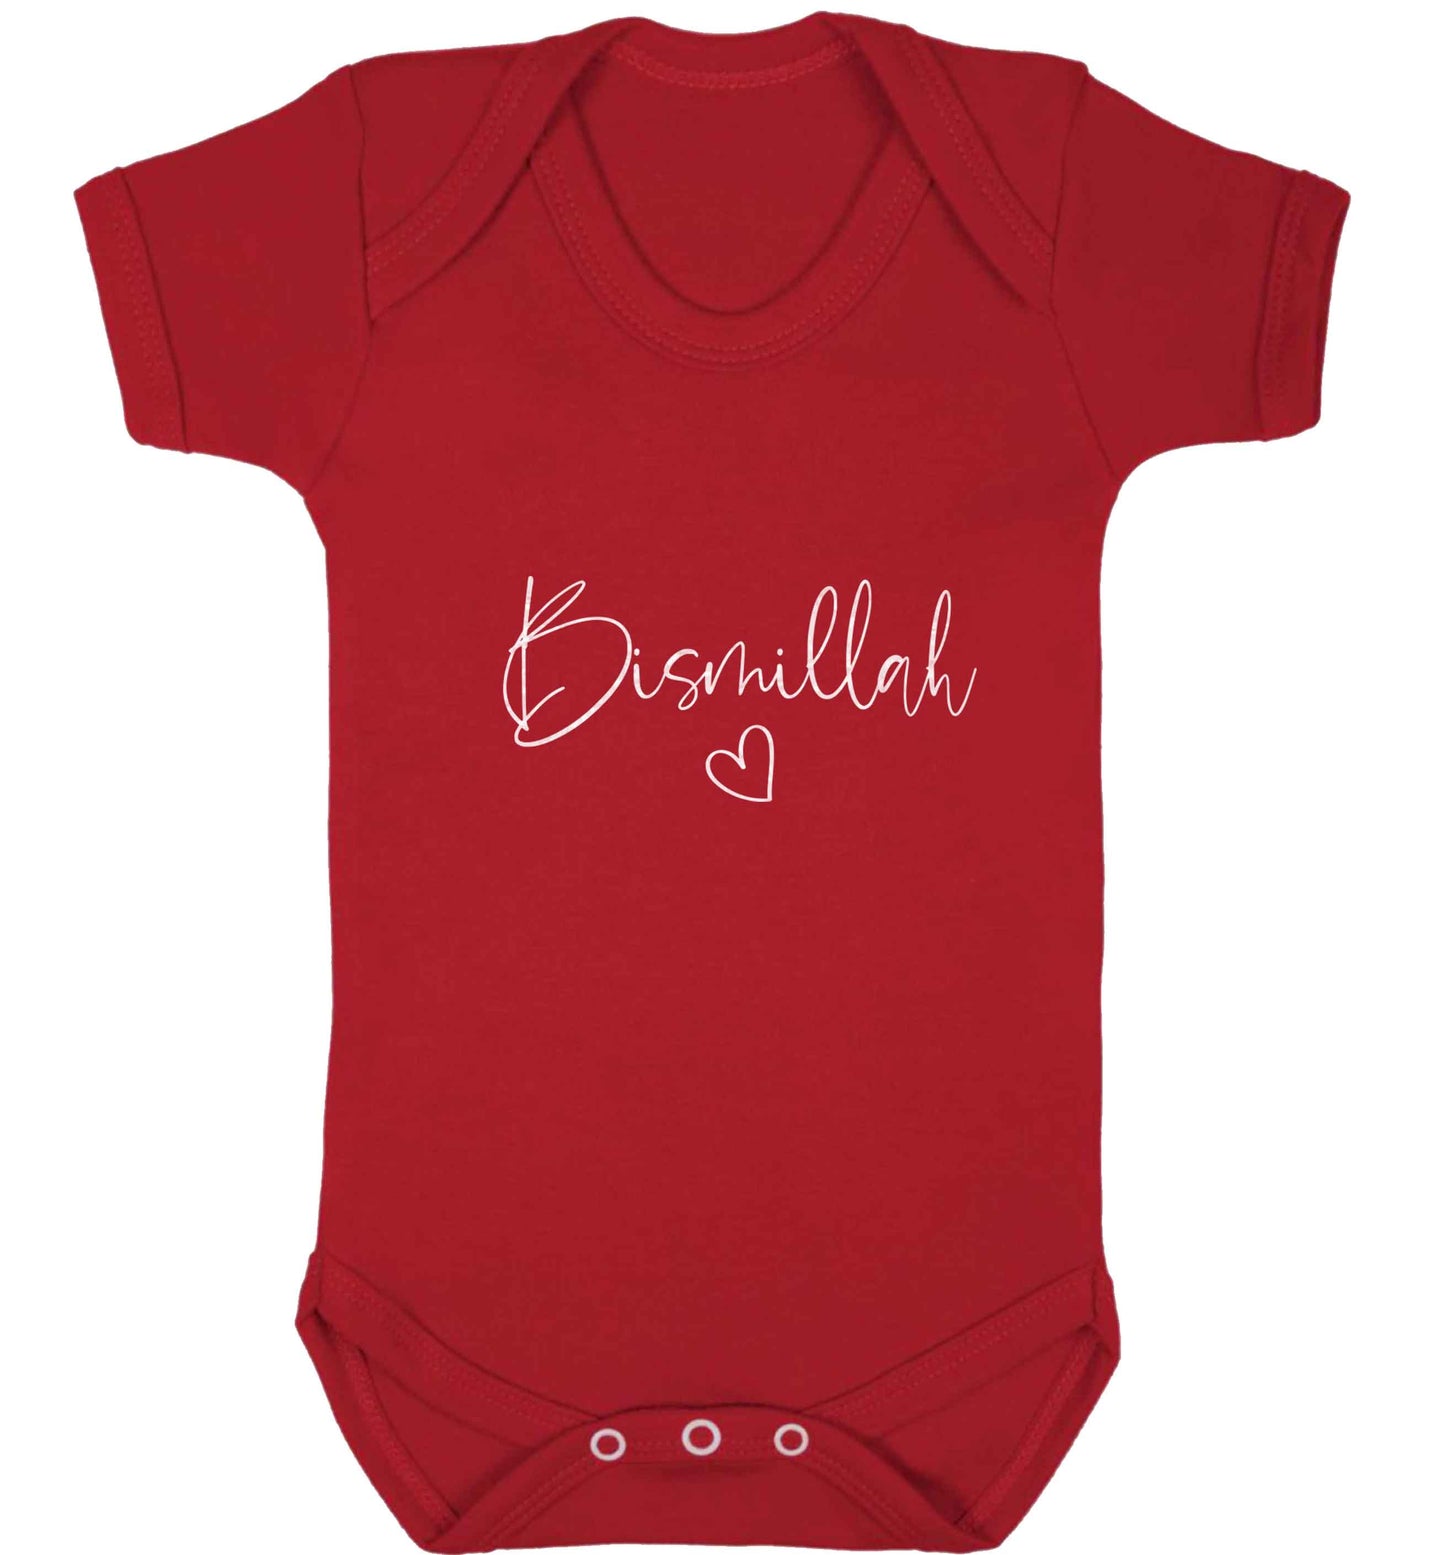 Bismillah baby vest red 18-24 months